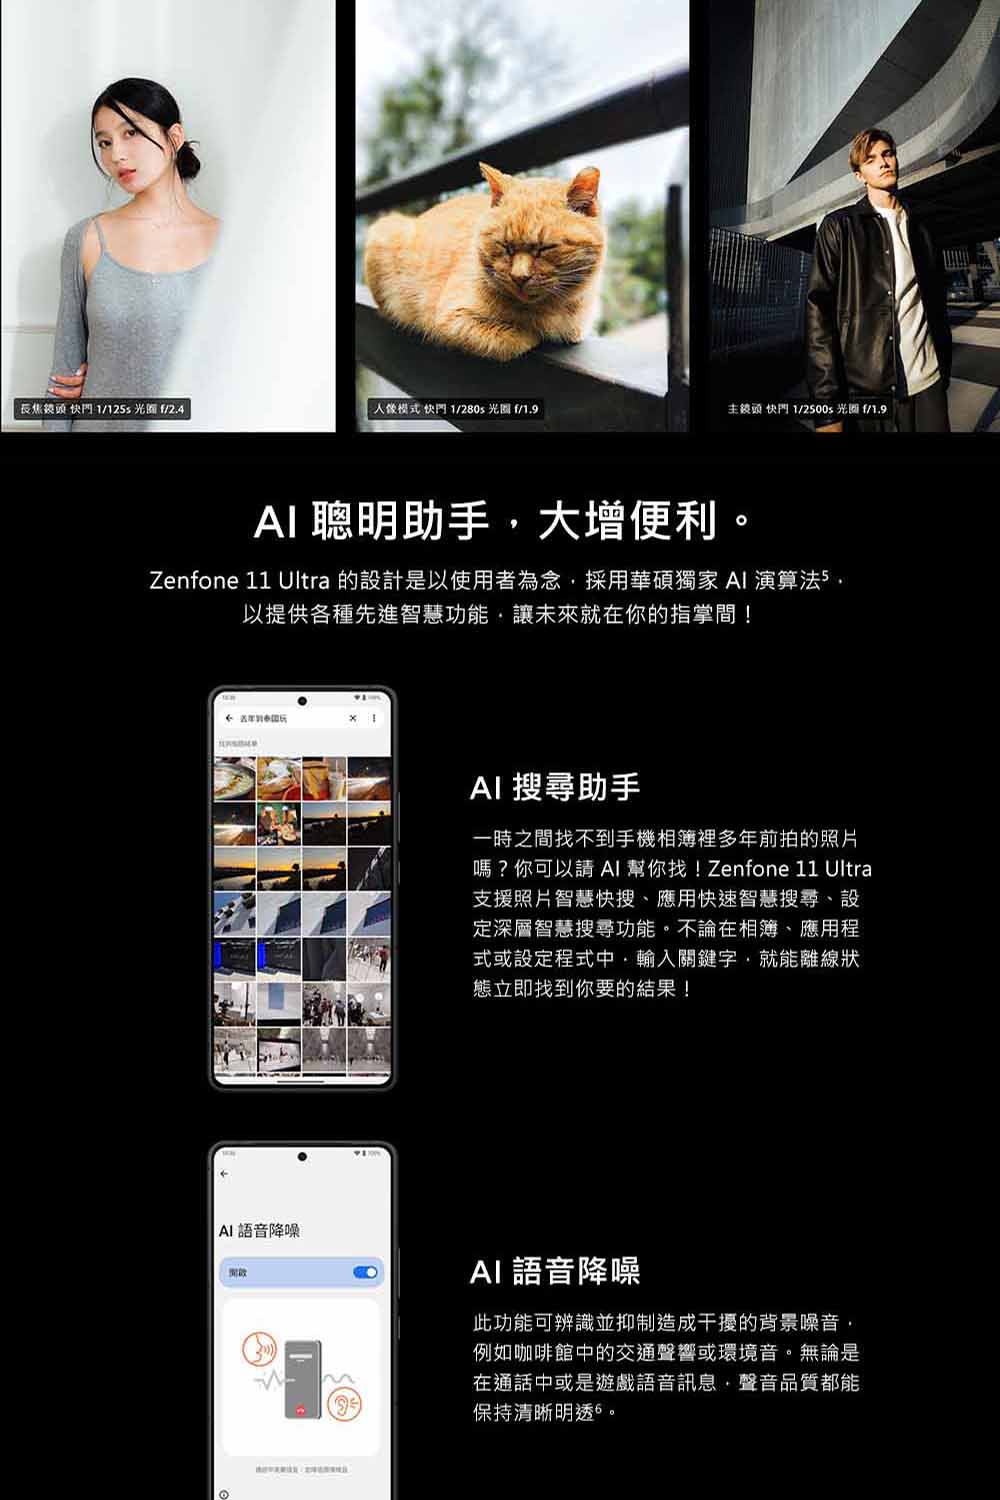 Zenfone 11 Ultra 的設計是以使用者為念,採用華碩獨家 AI 演算法